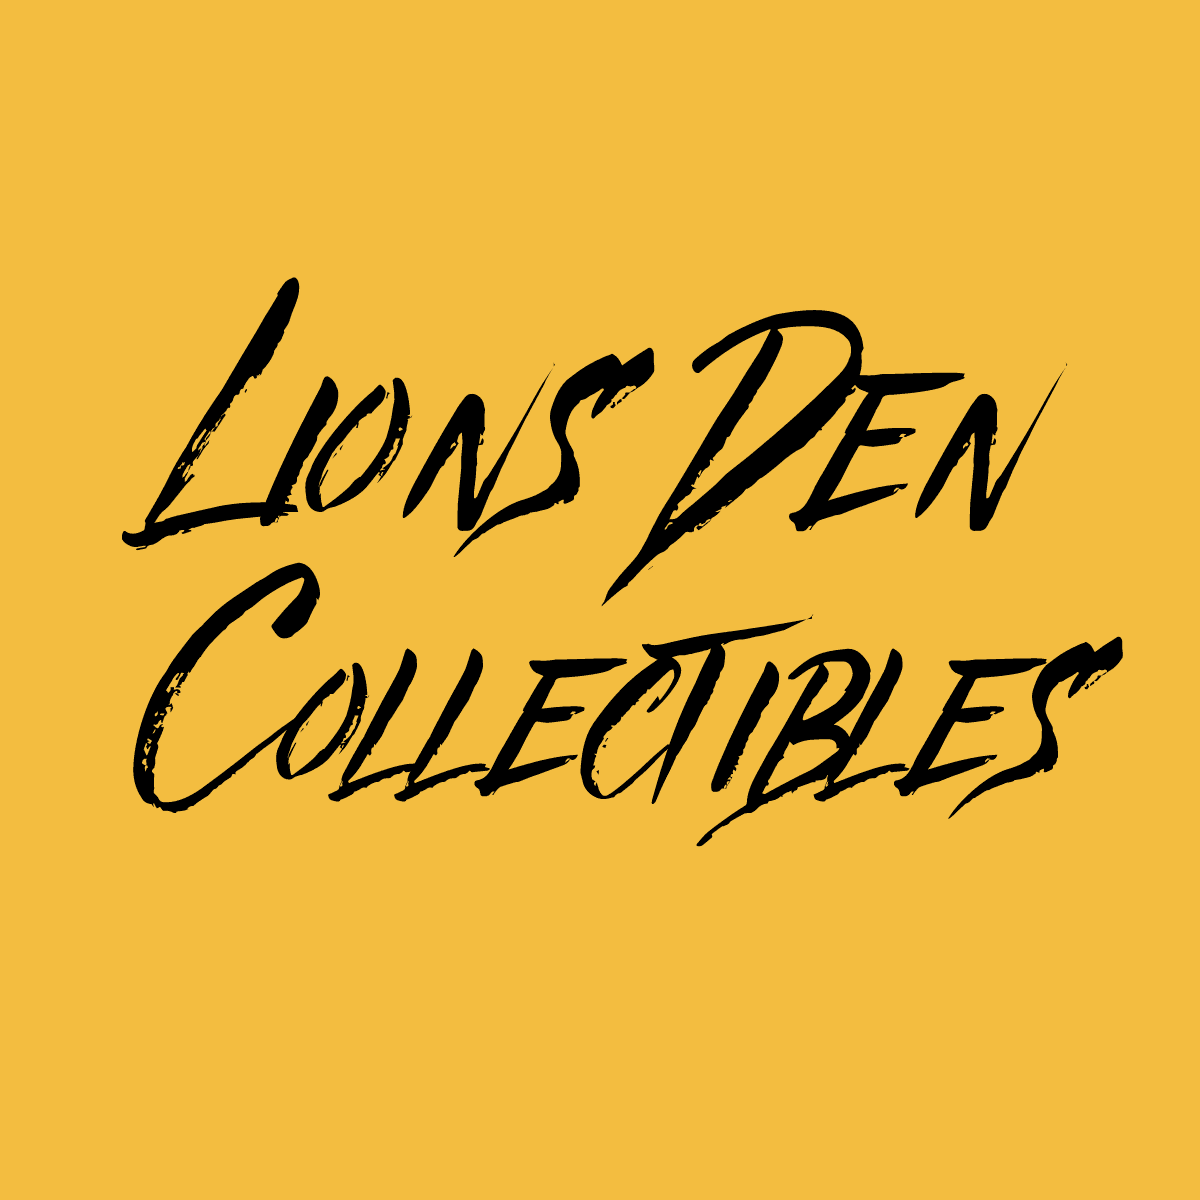 LionsDenCollectibles